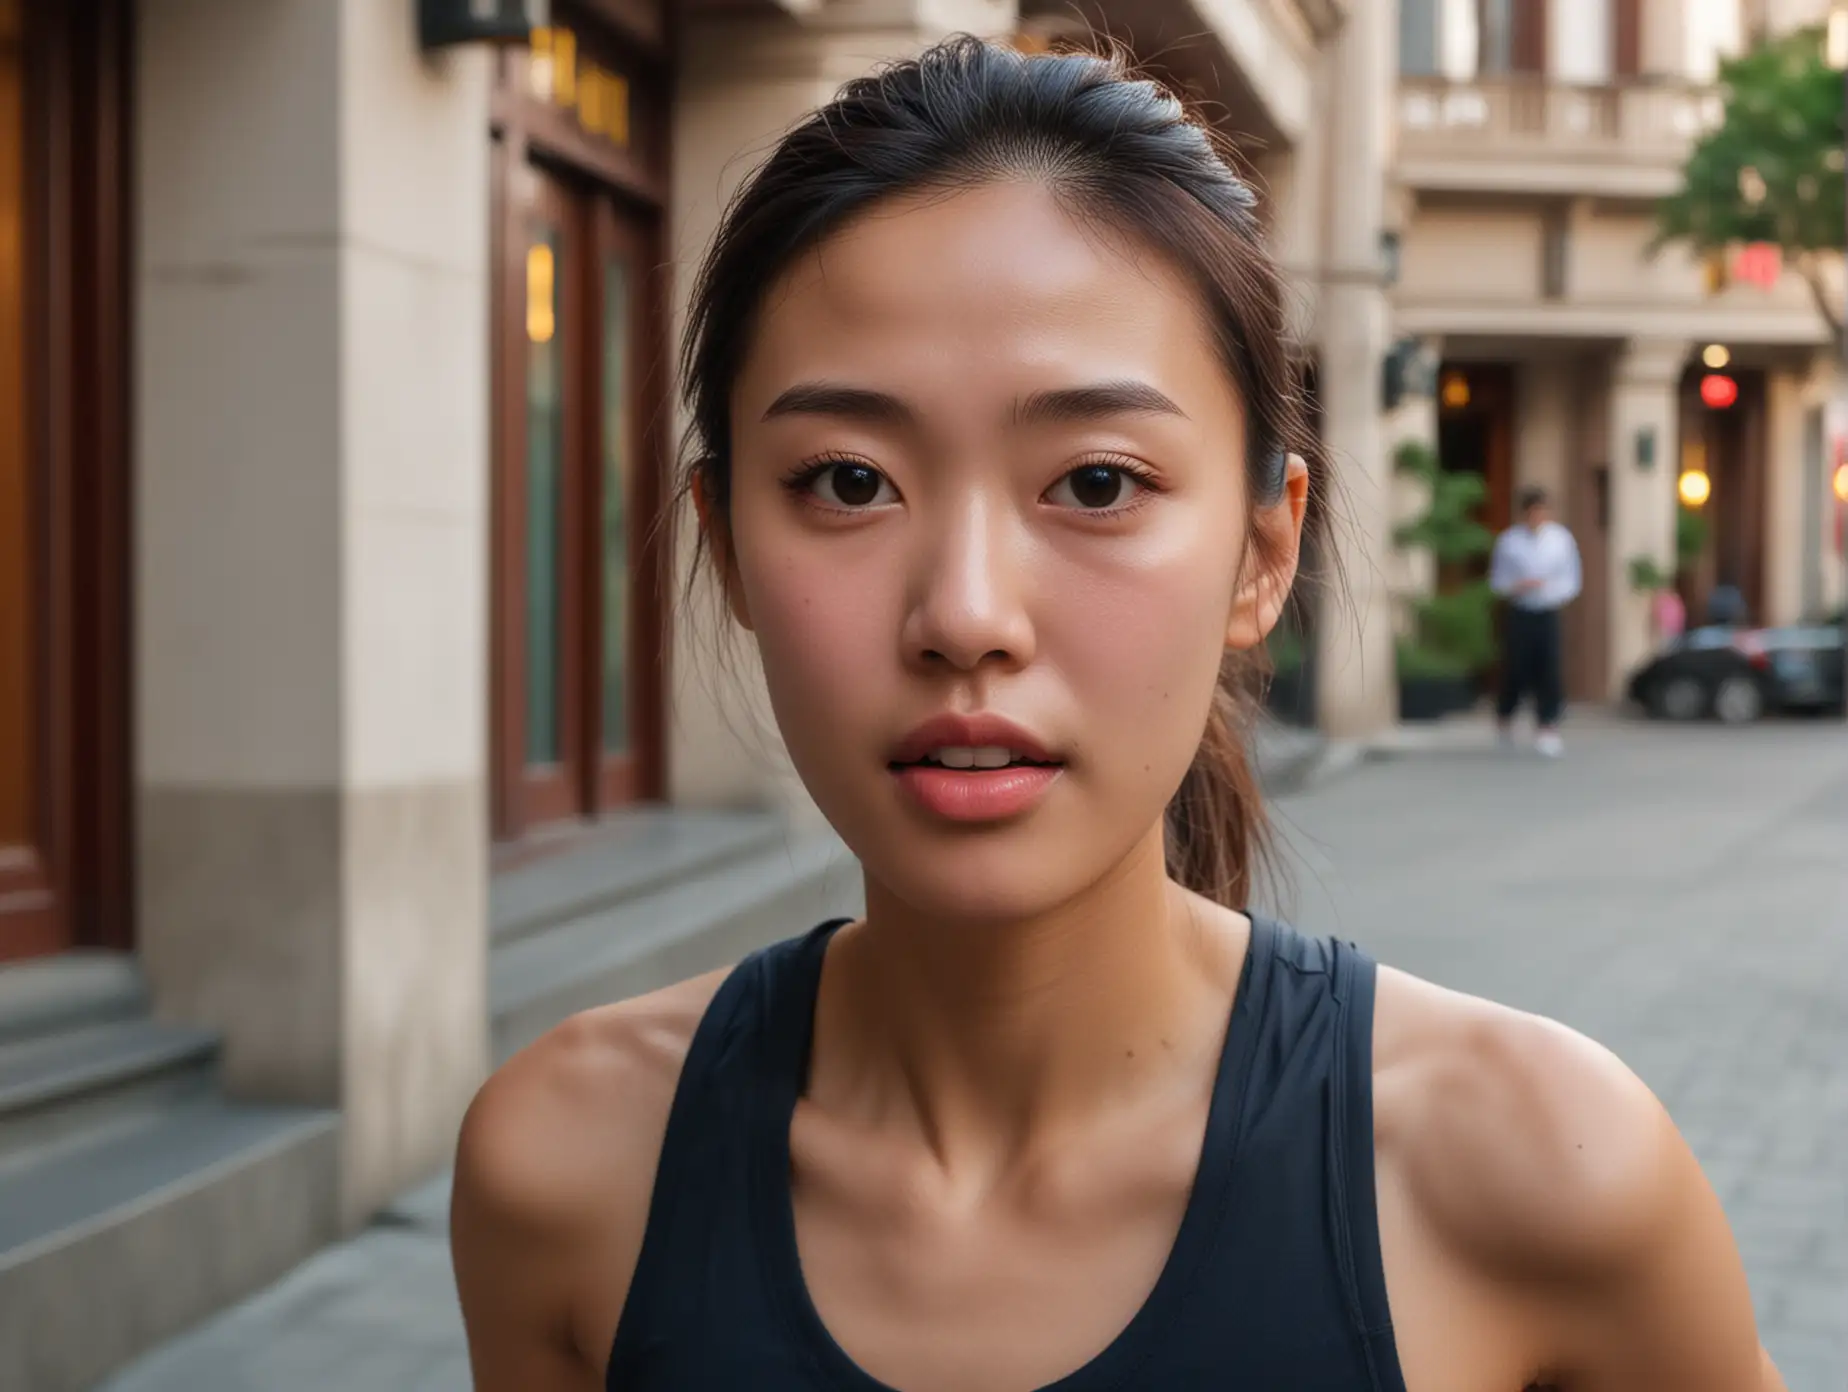 Stunning-Chinese-College-Athlete-in-Running-Attire-at-Sunrise